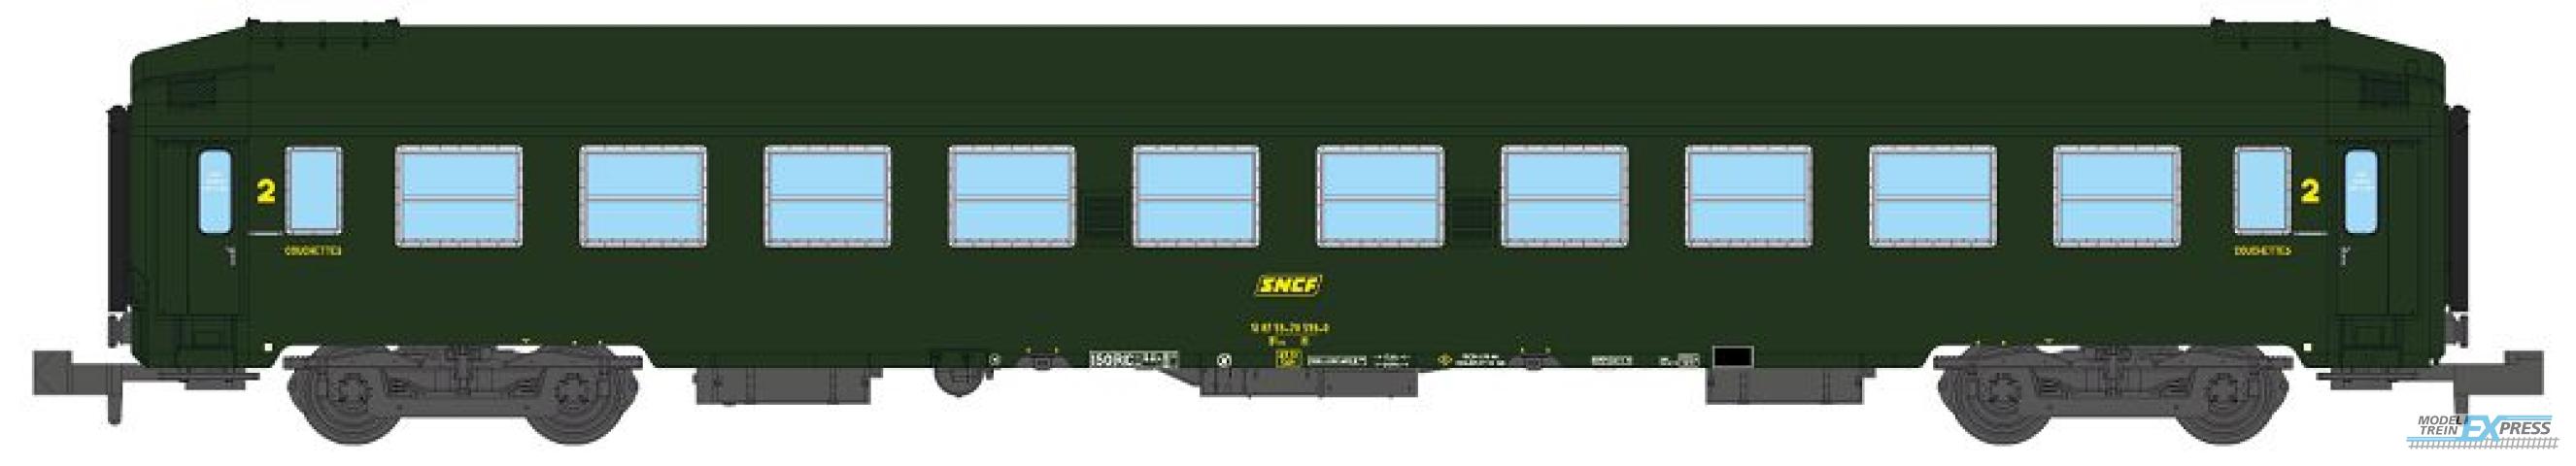 REE models NW-212 UIC SLEEPING CAR, High roof Green 301, Yellow framed logo Era IV